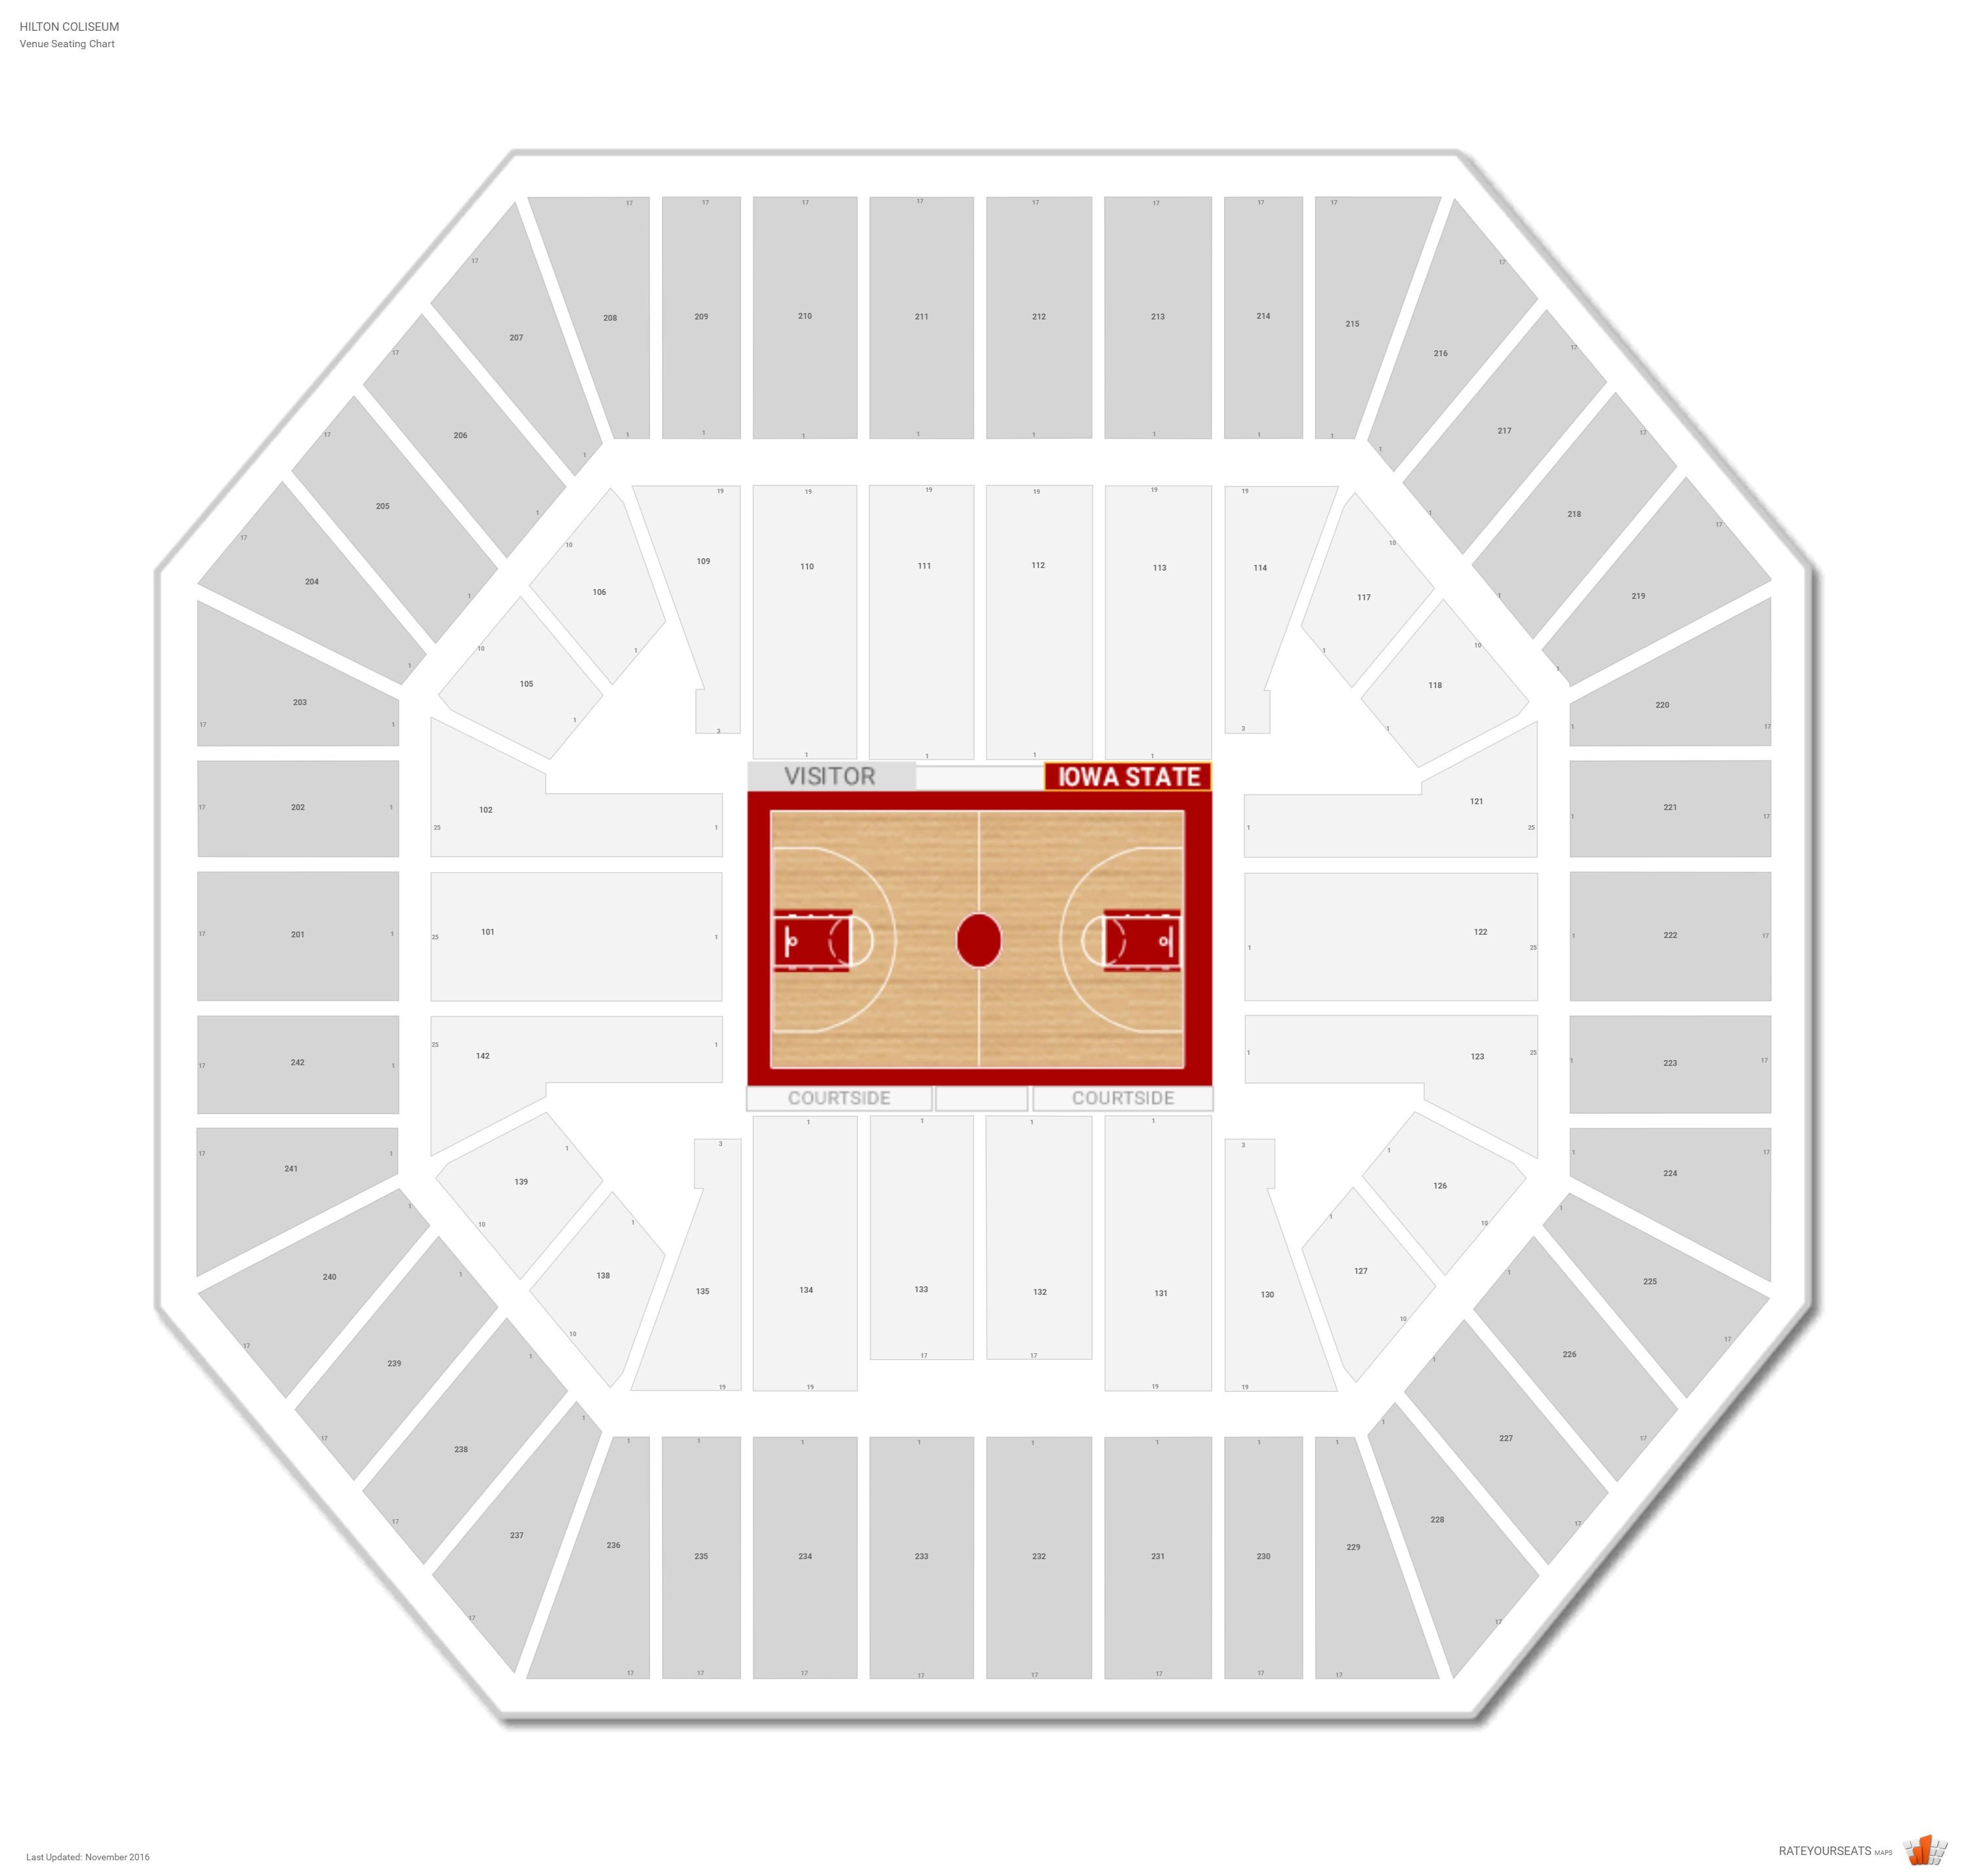 Hilton Coliseum Ames Ia Seating Chart